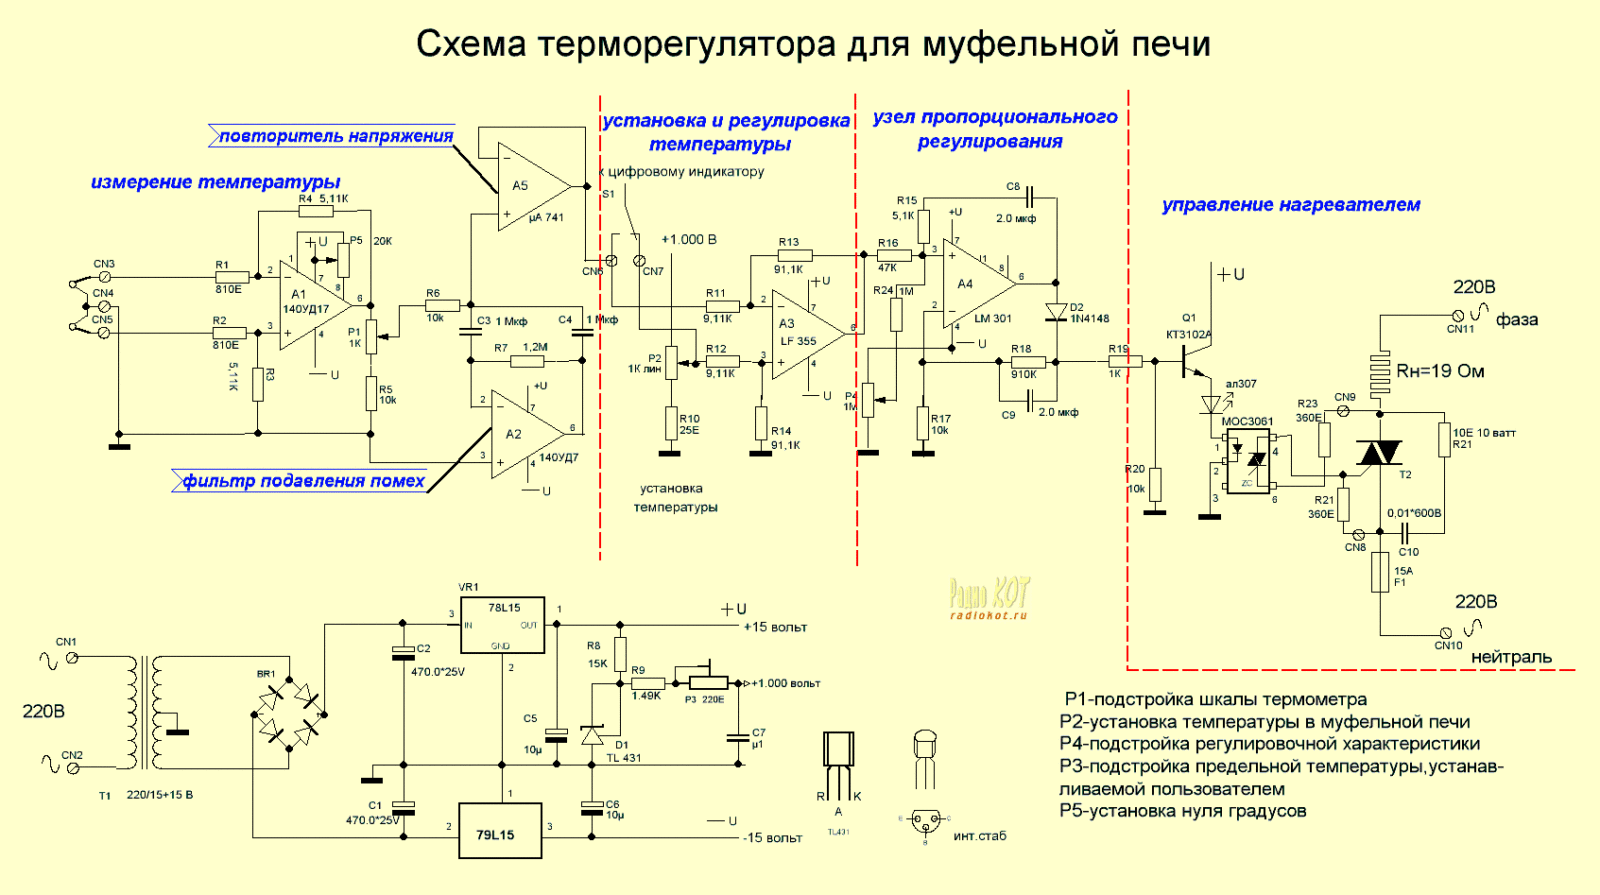 Схема терморегулятора муфельной печи